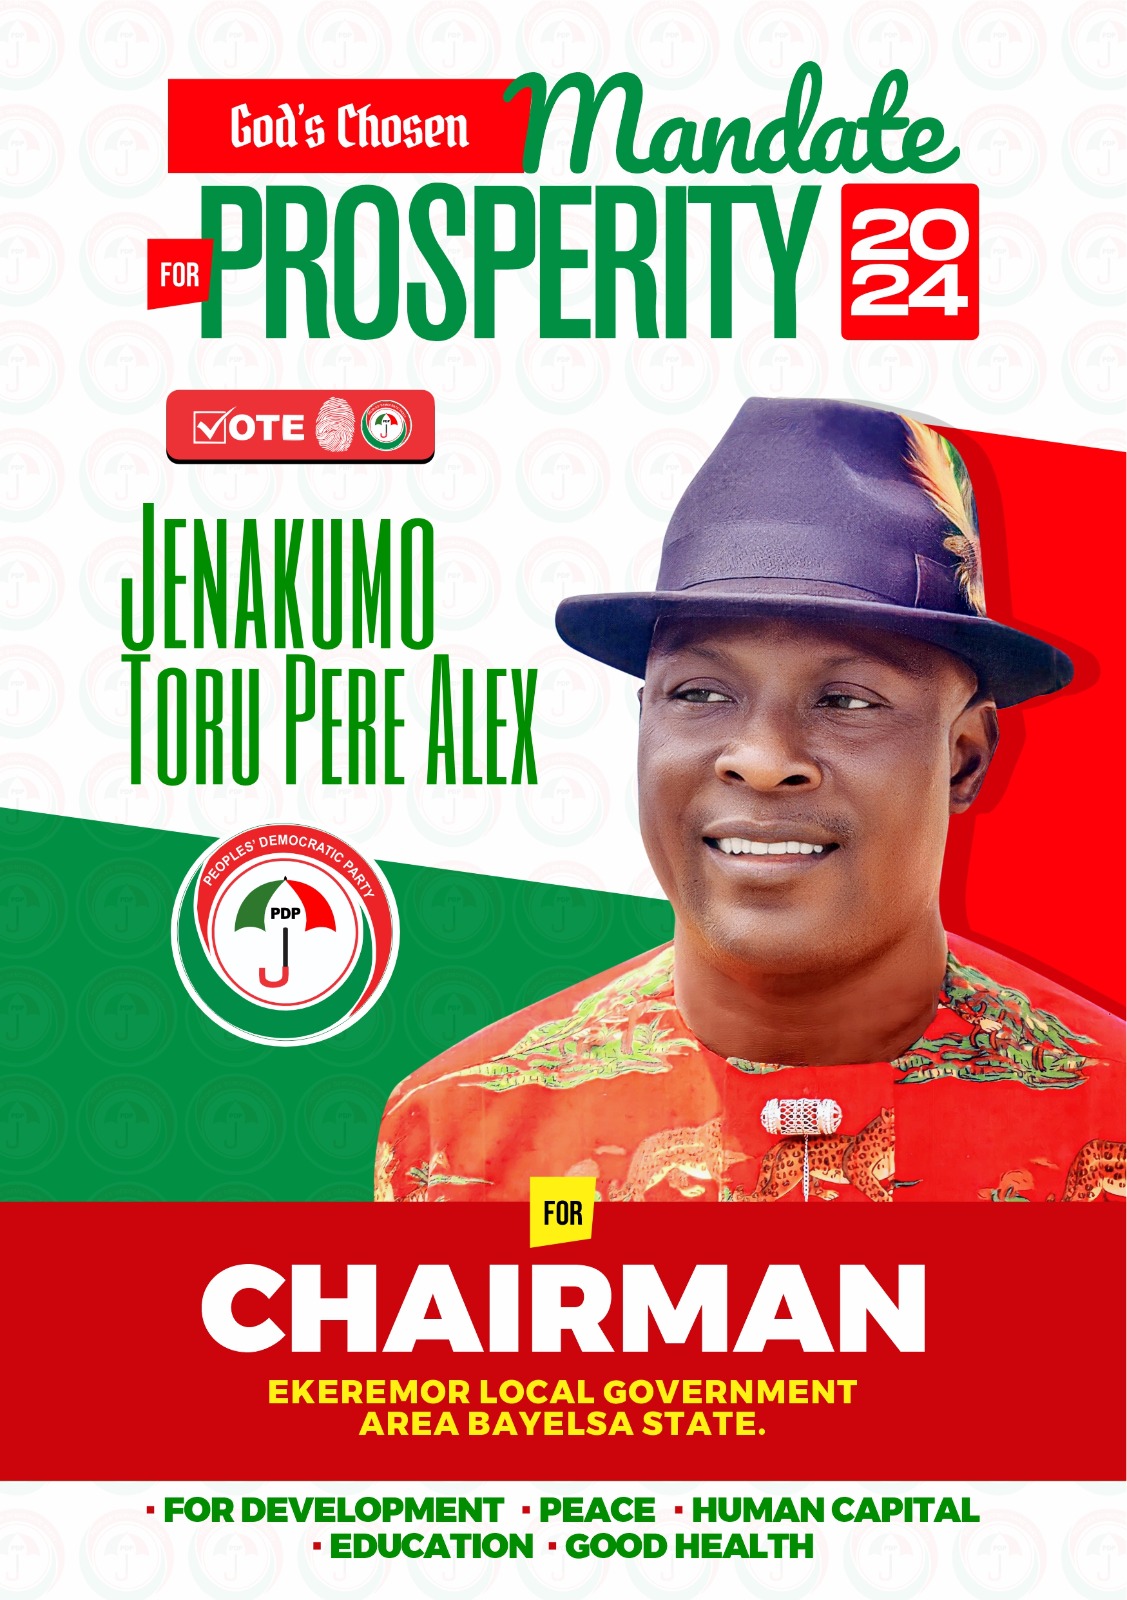 Jenakumo Torupere Alex: A Visionary Aspirant for Ekeremor LGA Chairmanship | Daily Report Nigeria